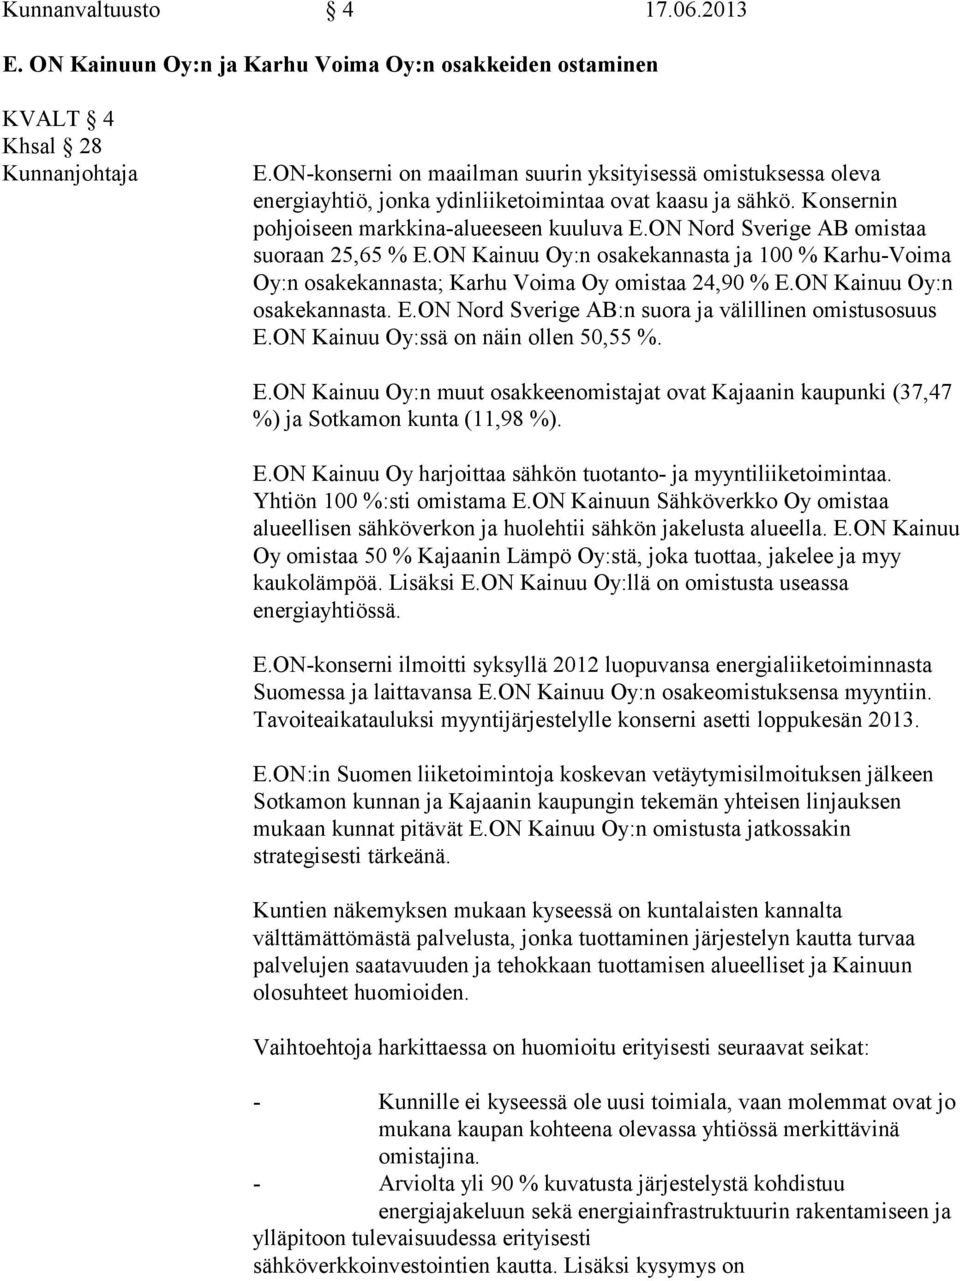 ON Nord Sverige AB omistaa suoraan 25,65 % E.ON Kainuu Oy:n osakekannasta ja 100 % Karhu-Voima Oy:n osakekannasta; Karhu Voima Oy omistaa 24,90 % E.ON Kainuu Oy:n osakekannasta. E.ON Nord Sverige AB:n suora ja välillinen omistusosuus E.